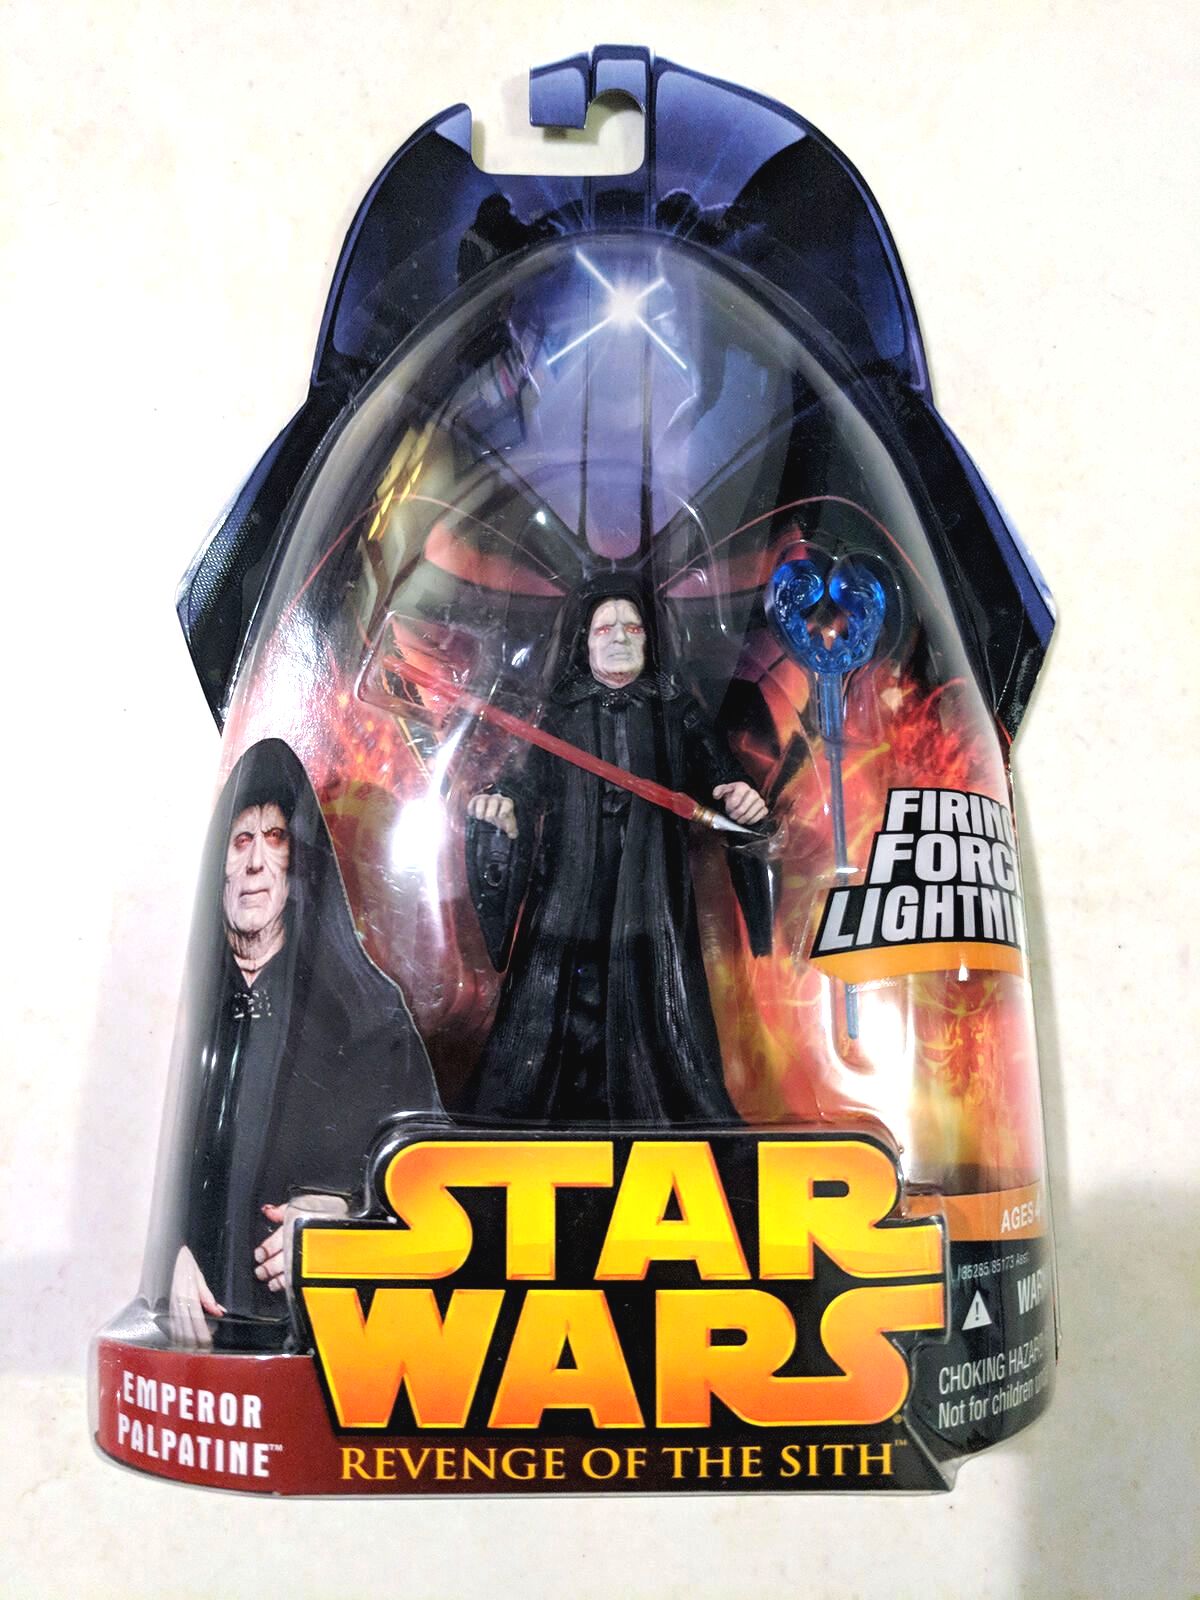 Revenge of the Sith Emperor Palpatine Firing Force Lightning Action Figure for sale online Hasbro Star Wars 